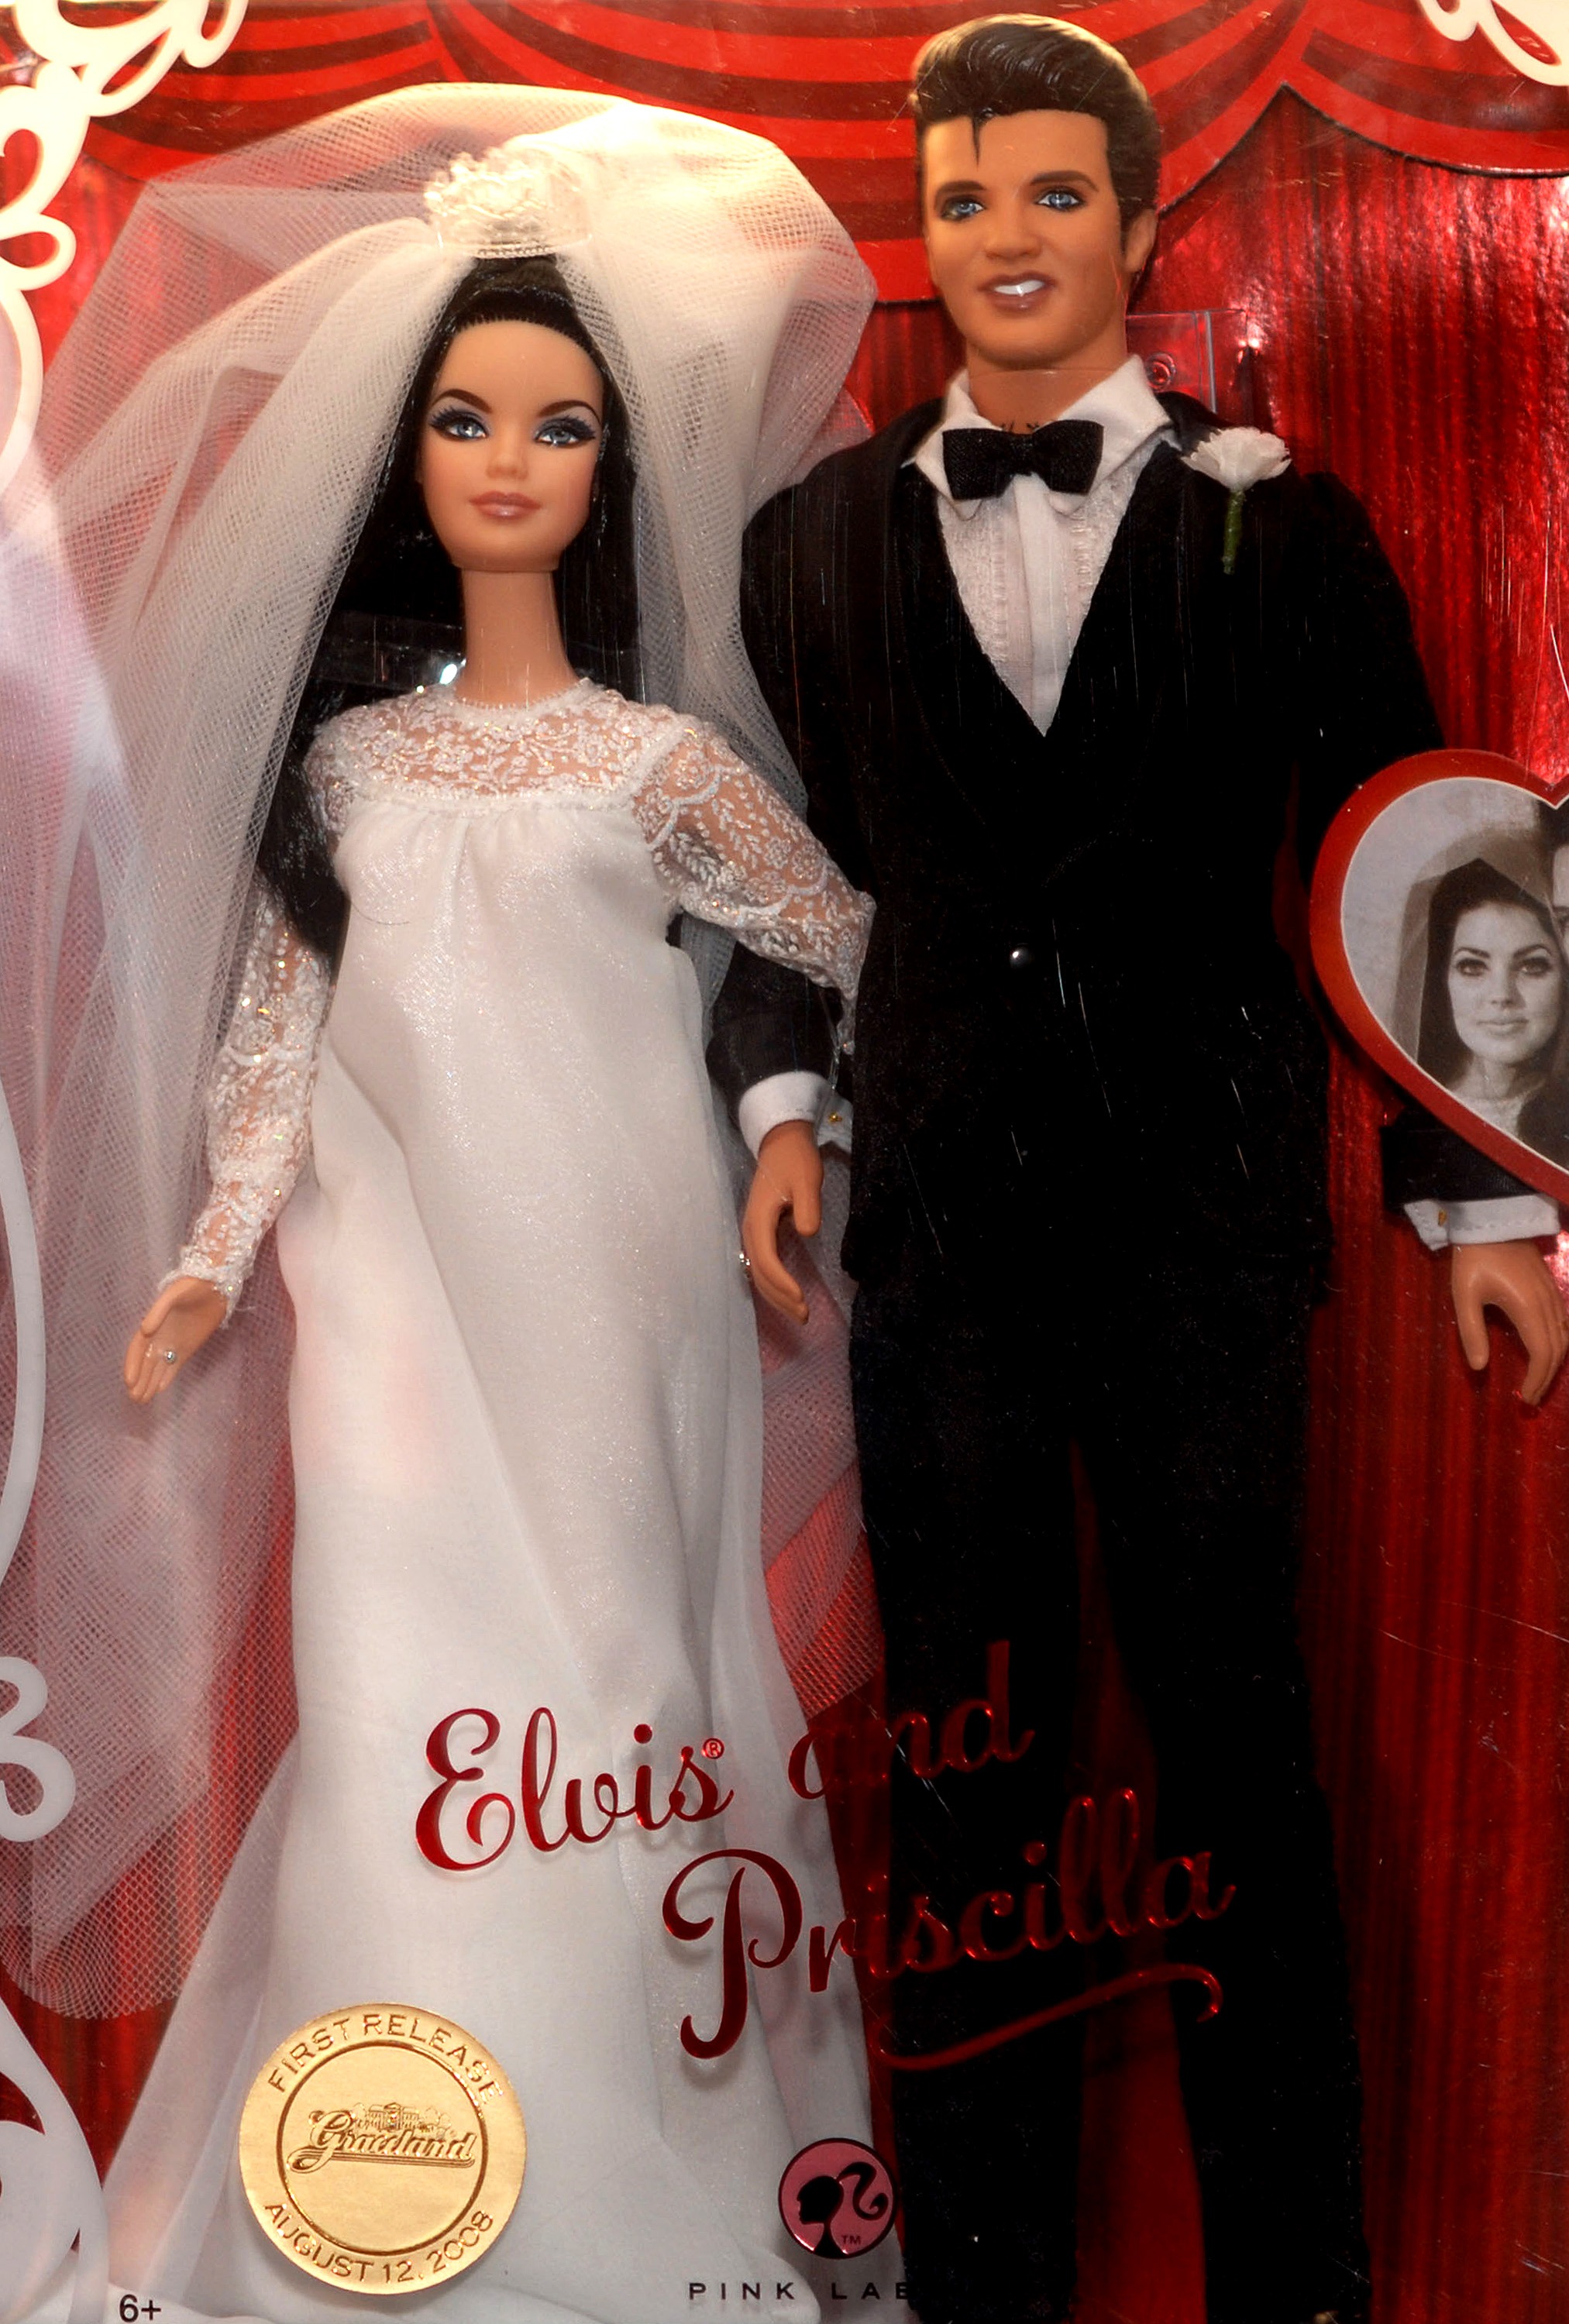 elvis and barbie doll set